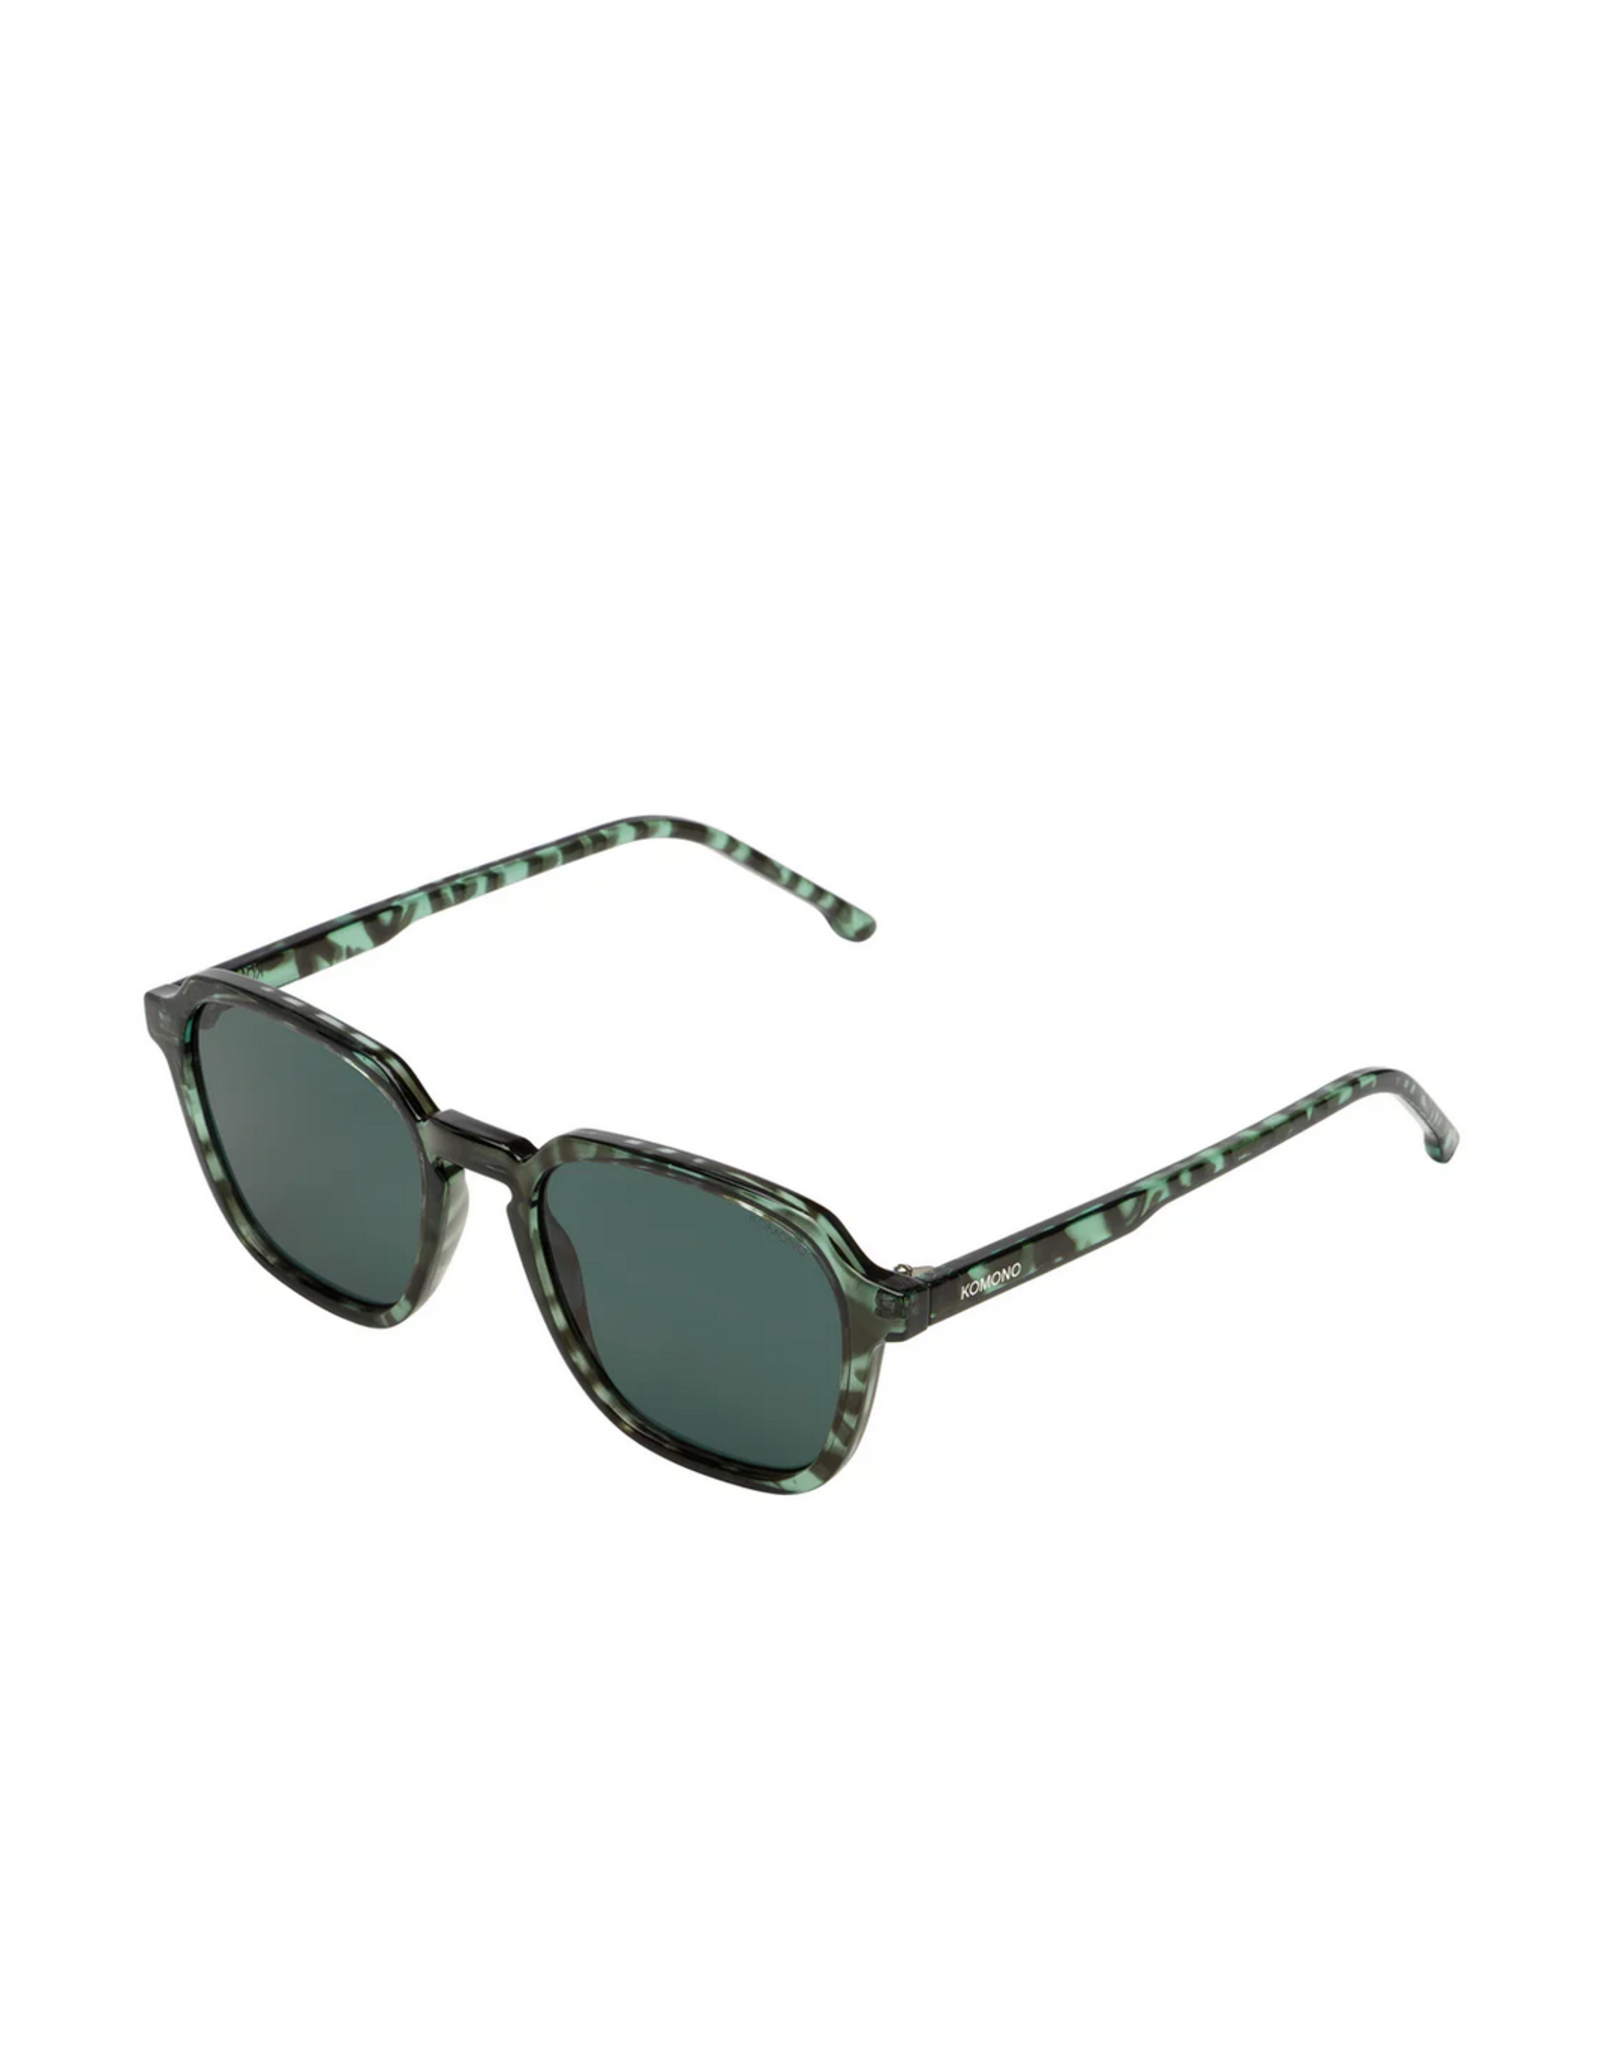 Komono Matty Aquatic Teal Sunglasses